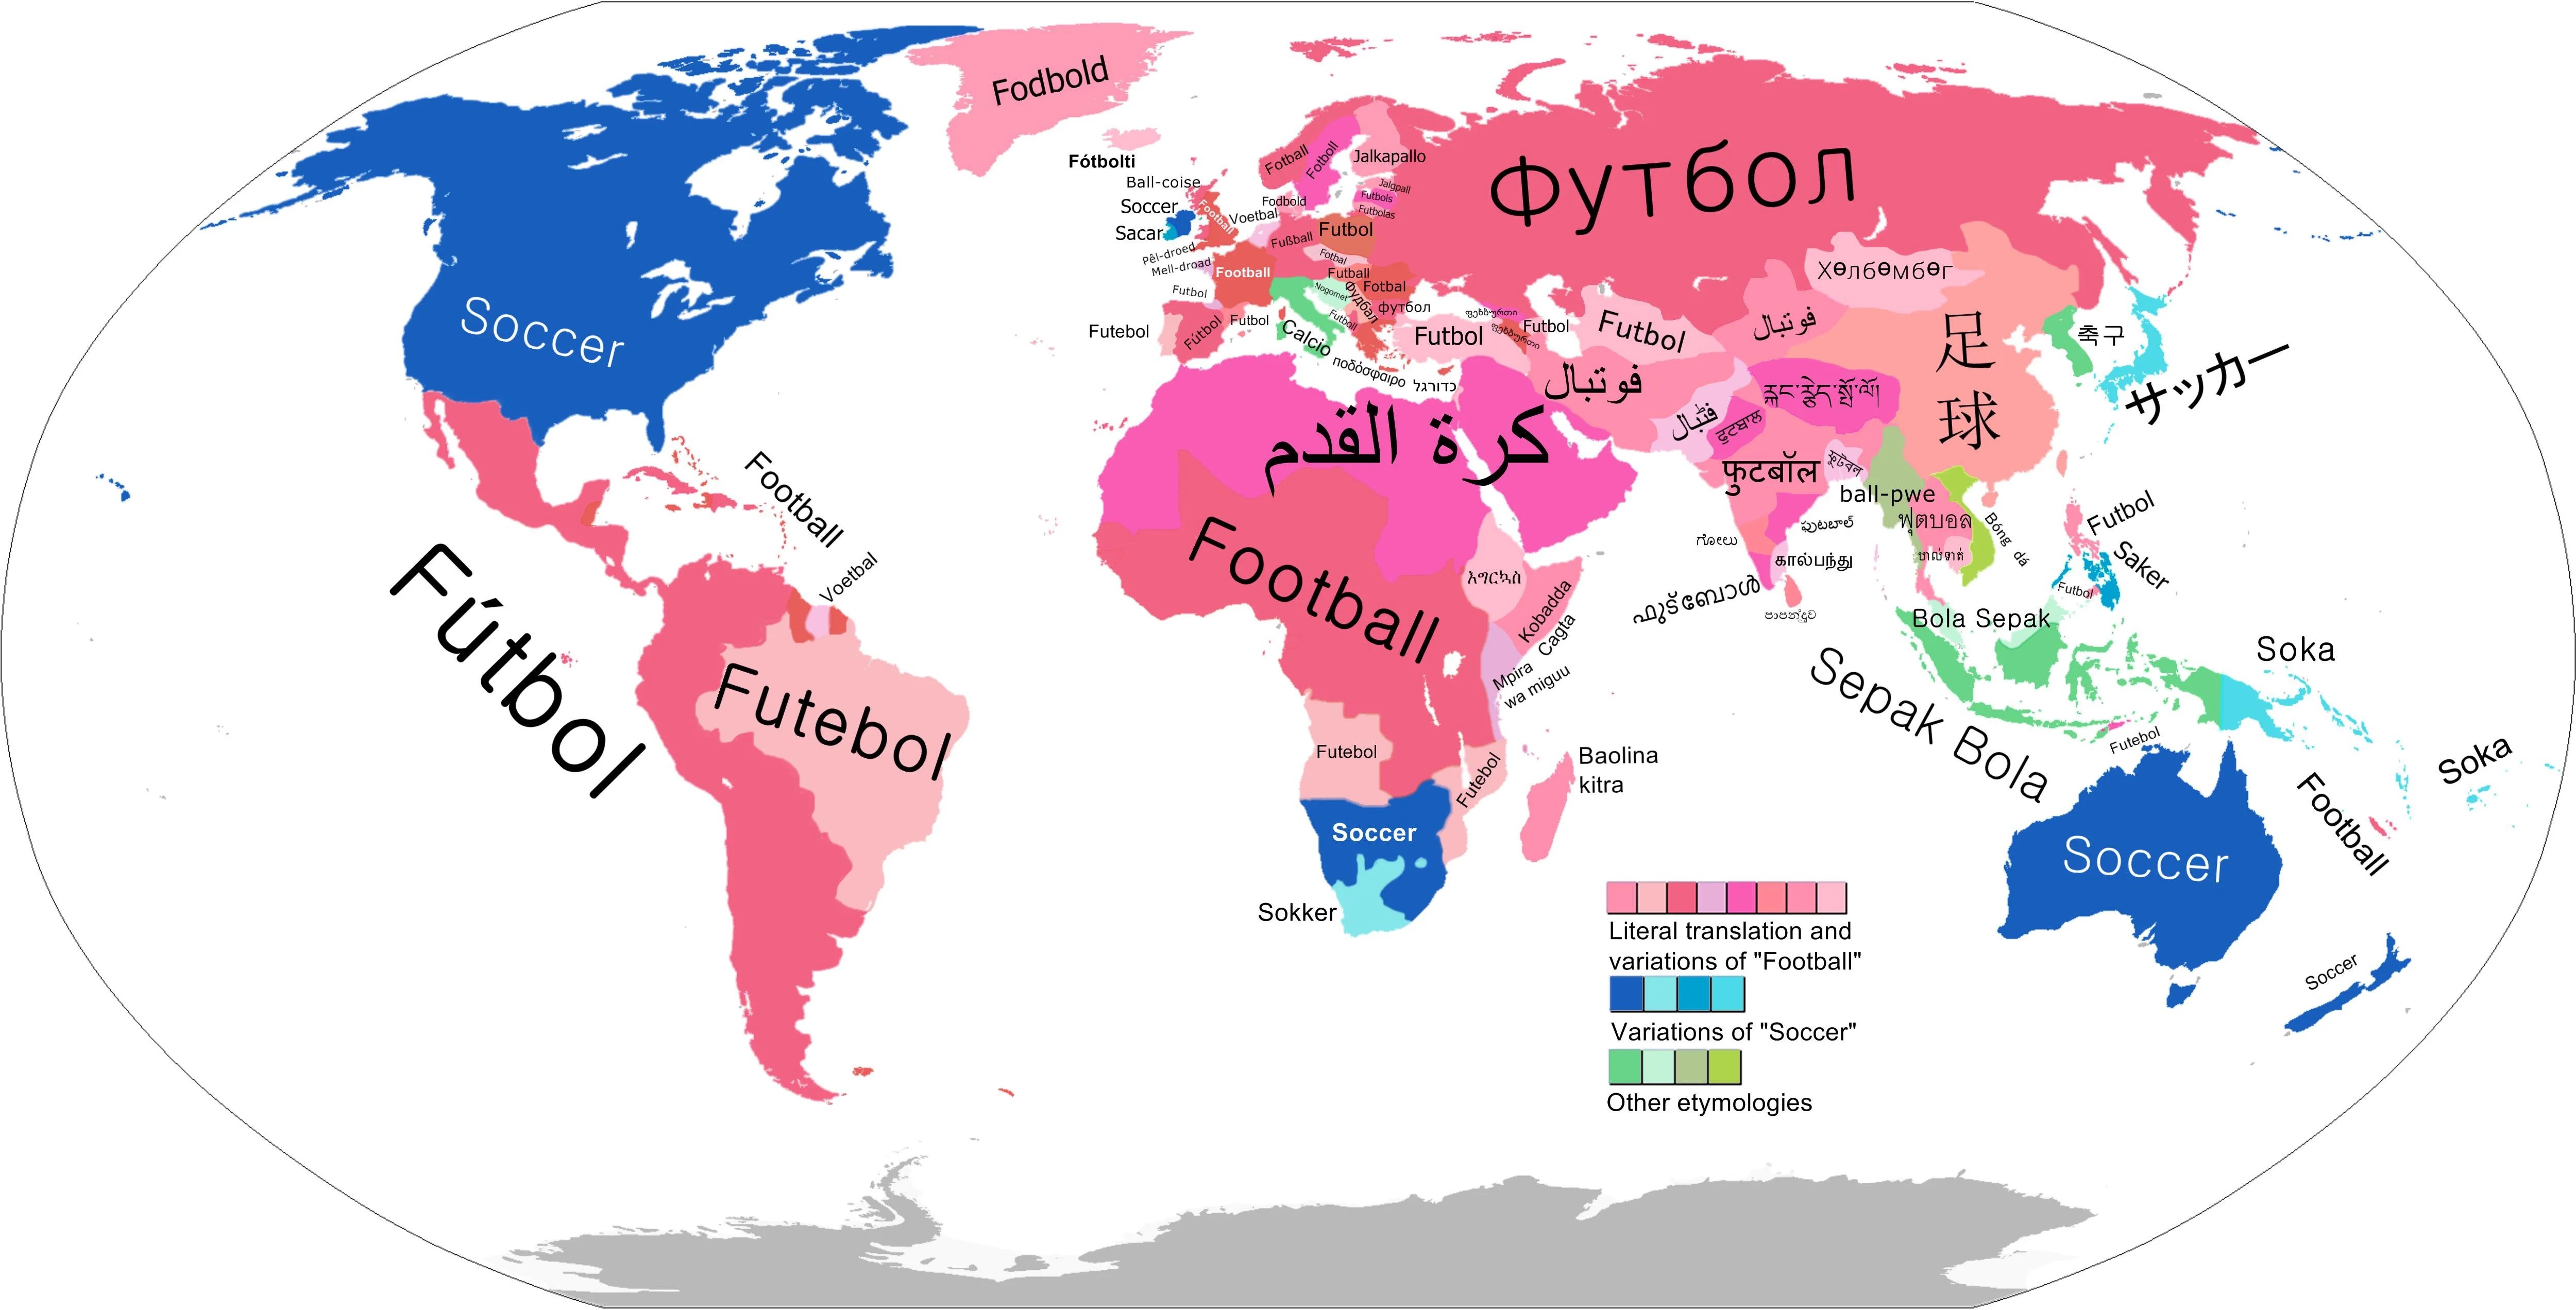 World soccer explained in 10 maps